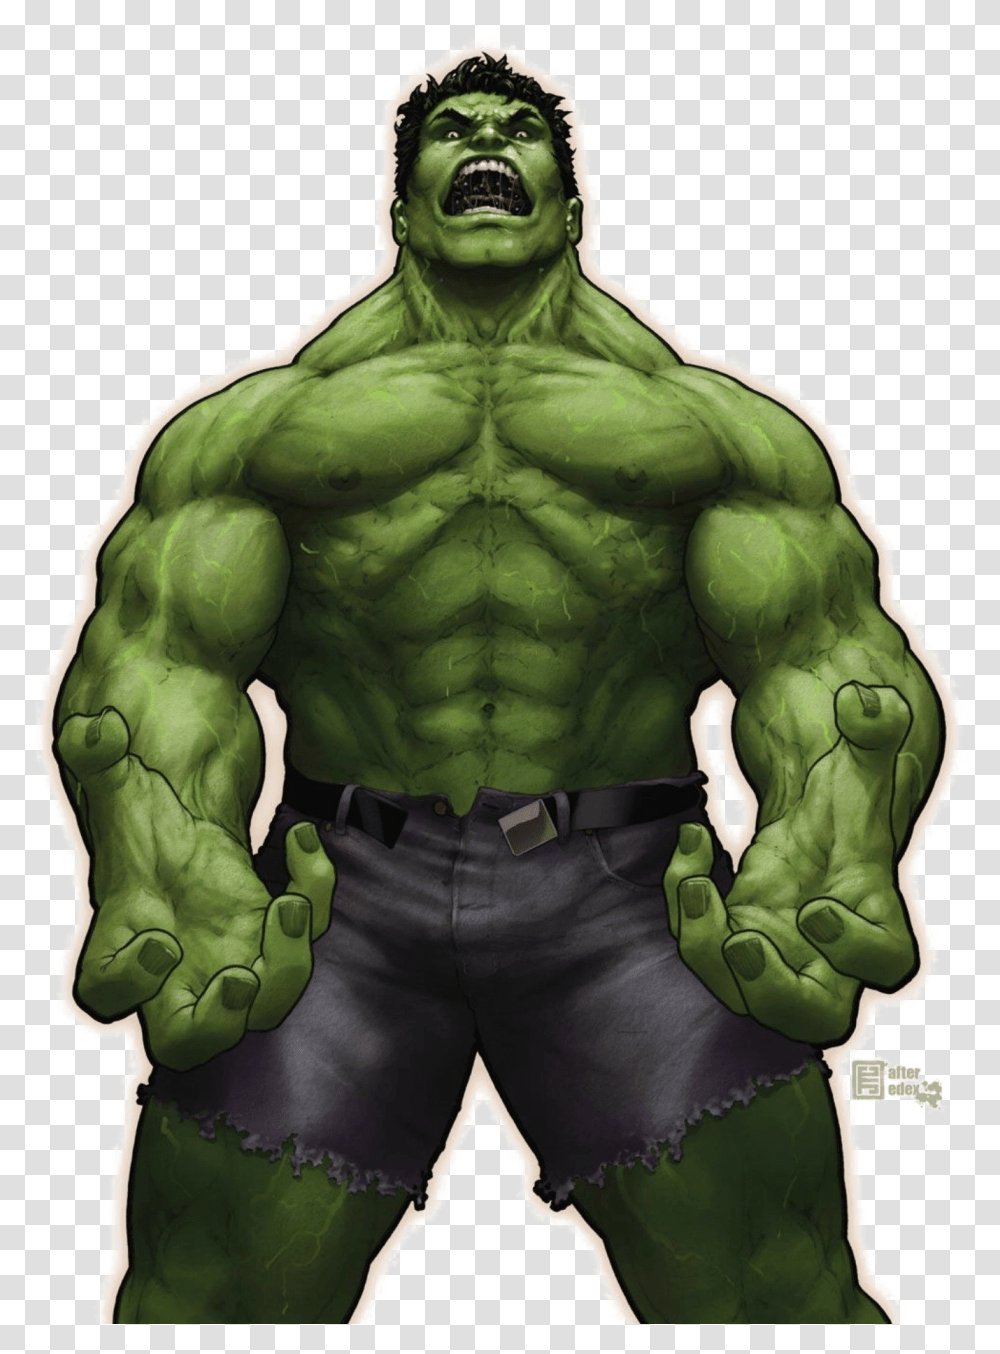 Download Free Hulk Image Hulk Penis, Person, Human, Plant, Food Transparent Png